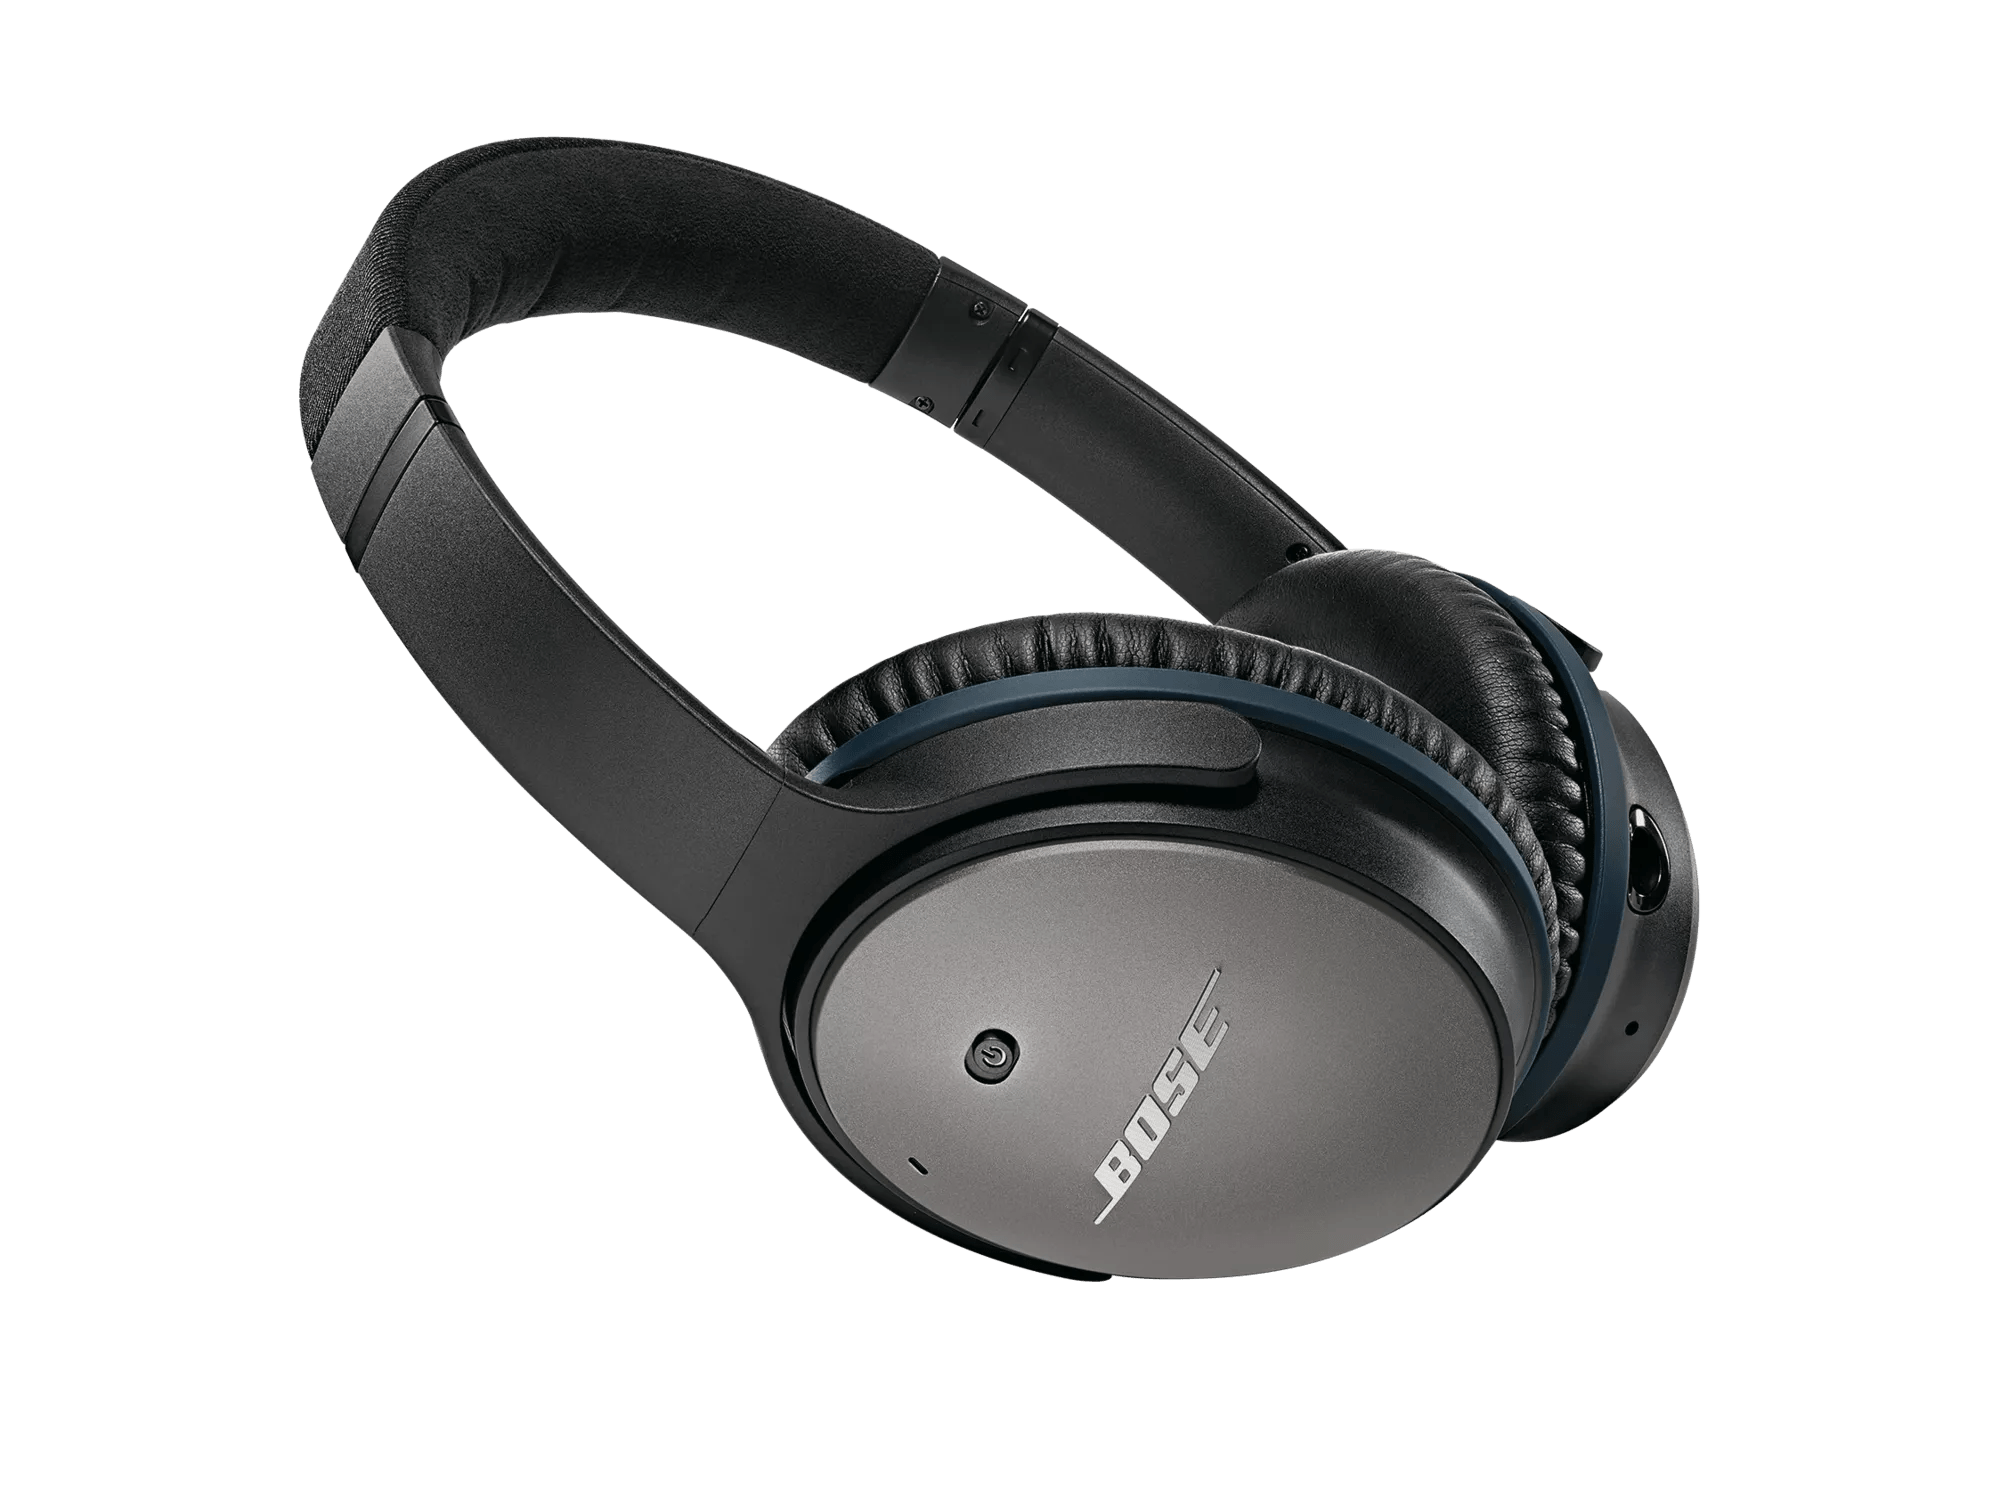 Bose QuiteComfort 25 Wired Headphones - Black for sale online